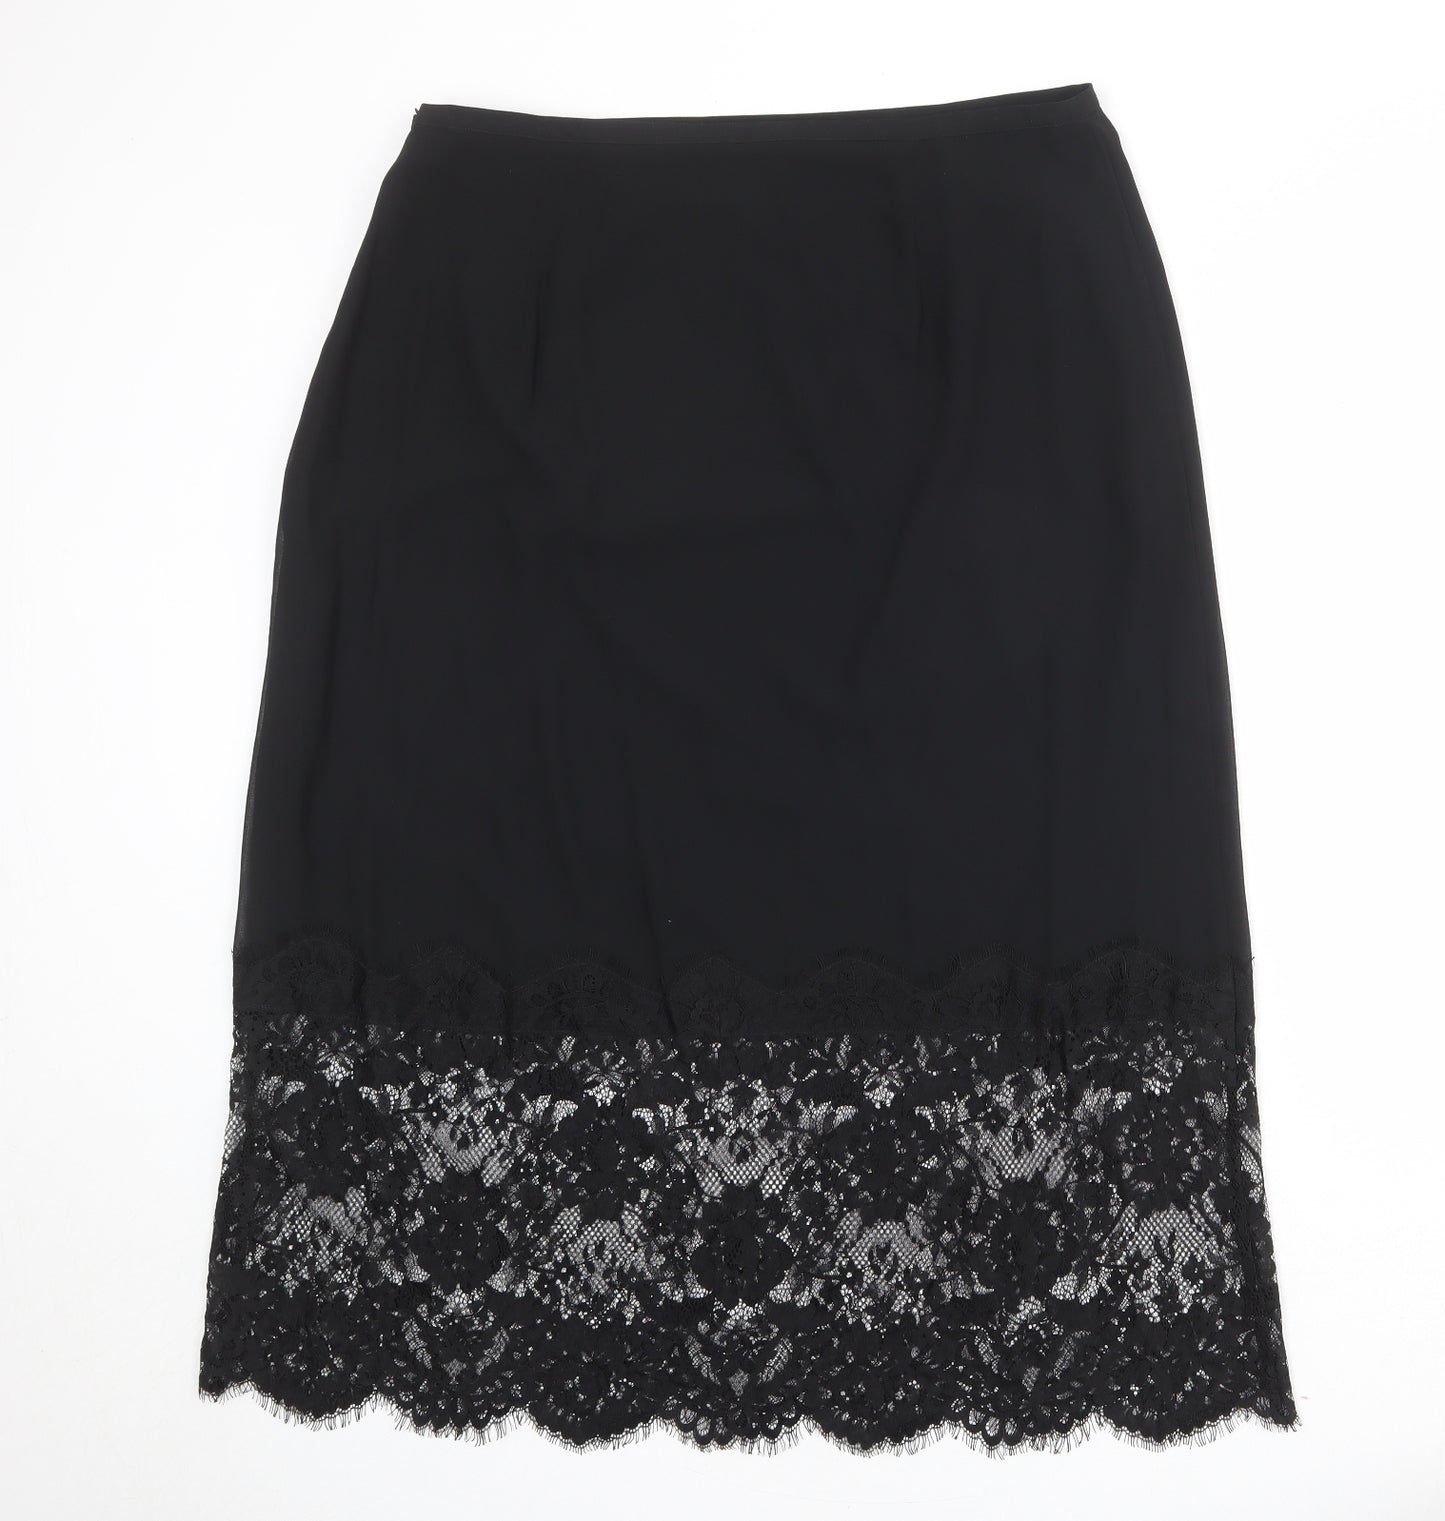 Marks and Spencer Womens Black Floral Polyester Pettiskirt Skirt Size 18 Zip